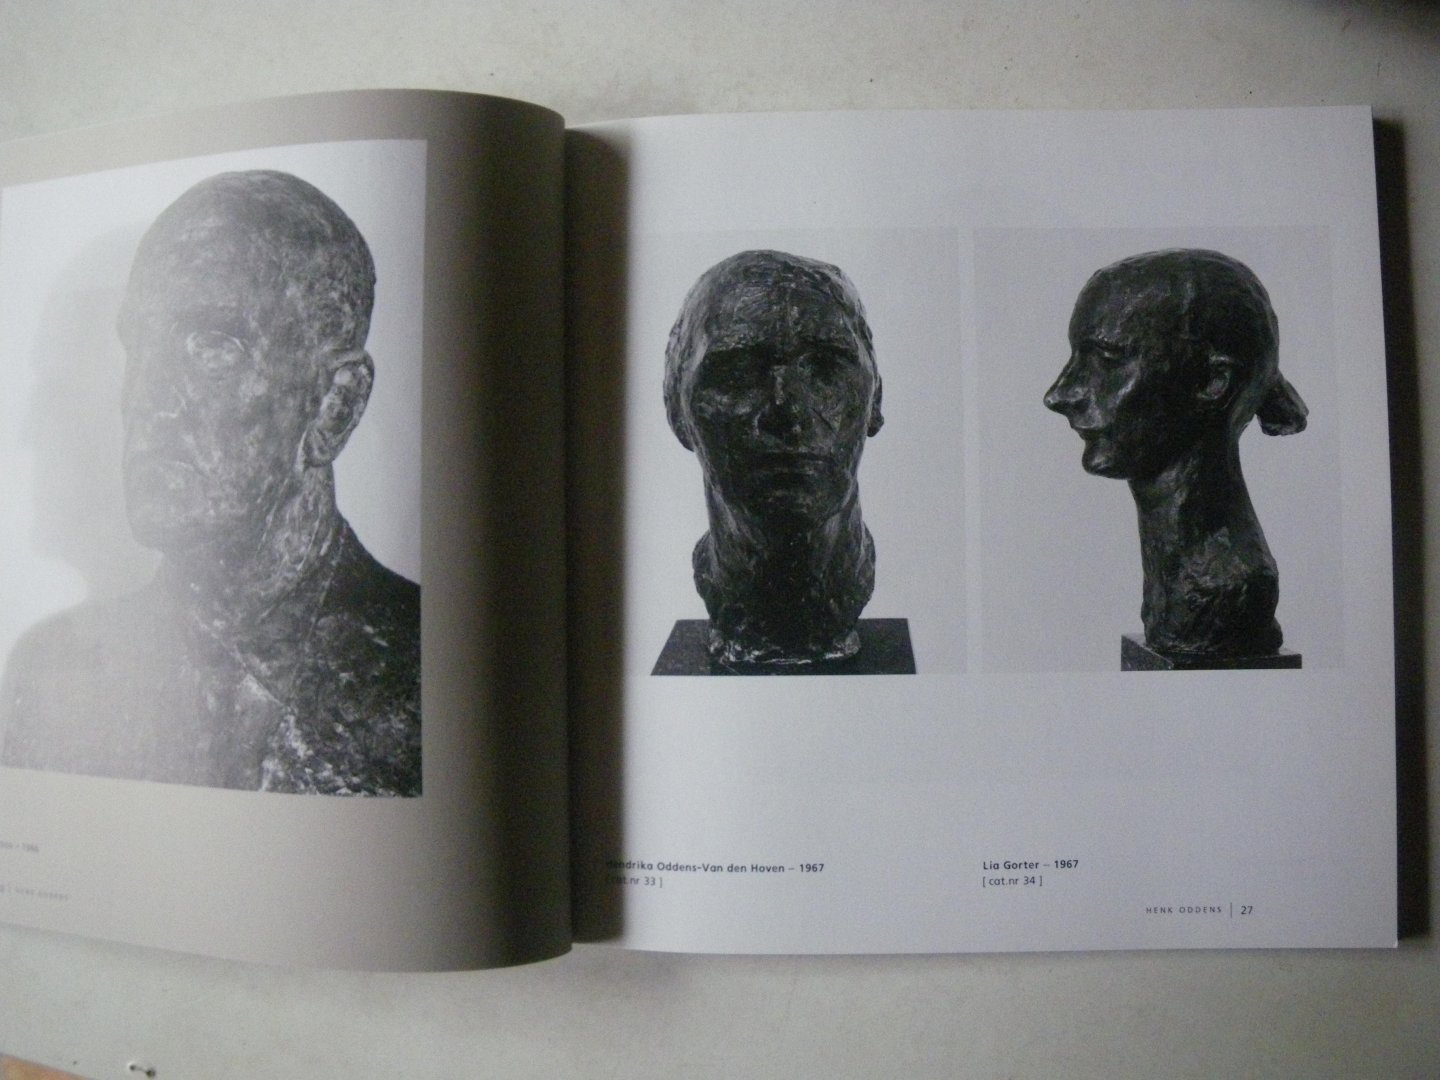 ODDENS,HENK. Catalogus 2000. - Portretkunst van Henk Oddens.